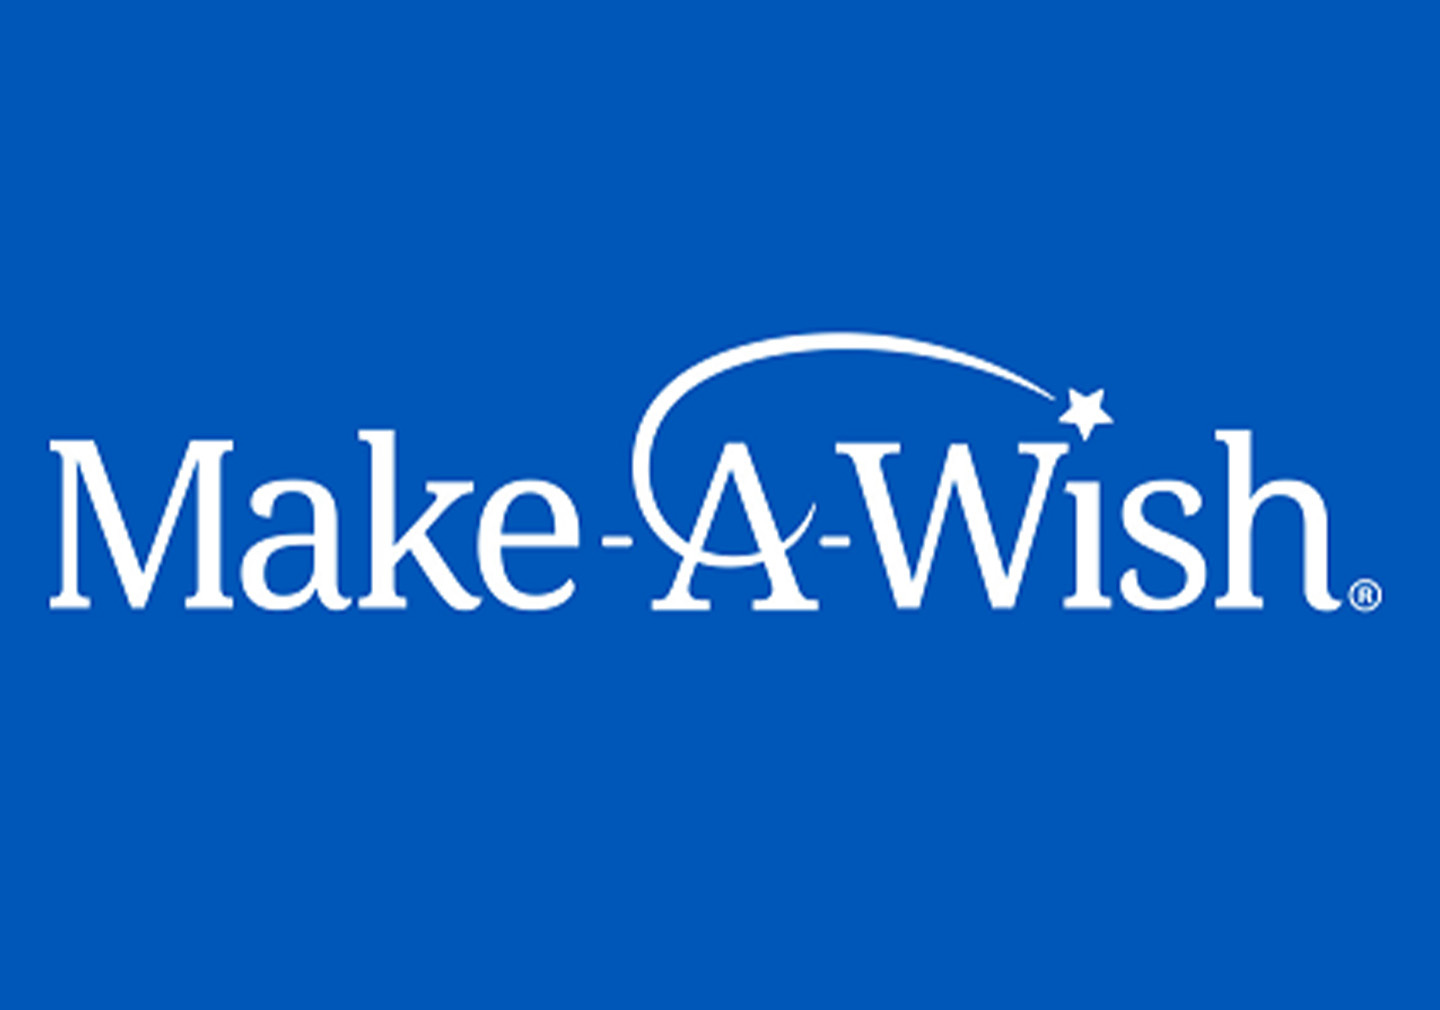 The Make-A-Wish-logo